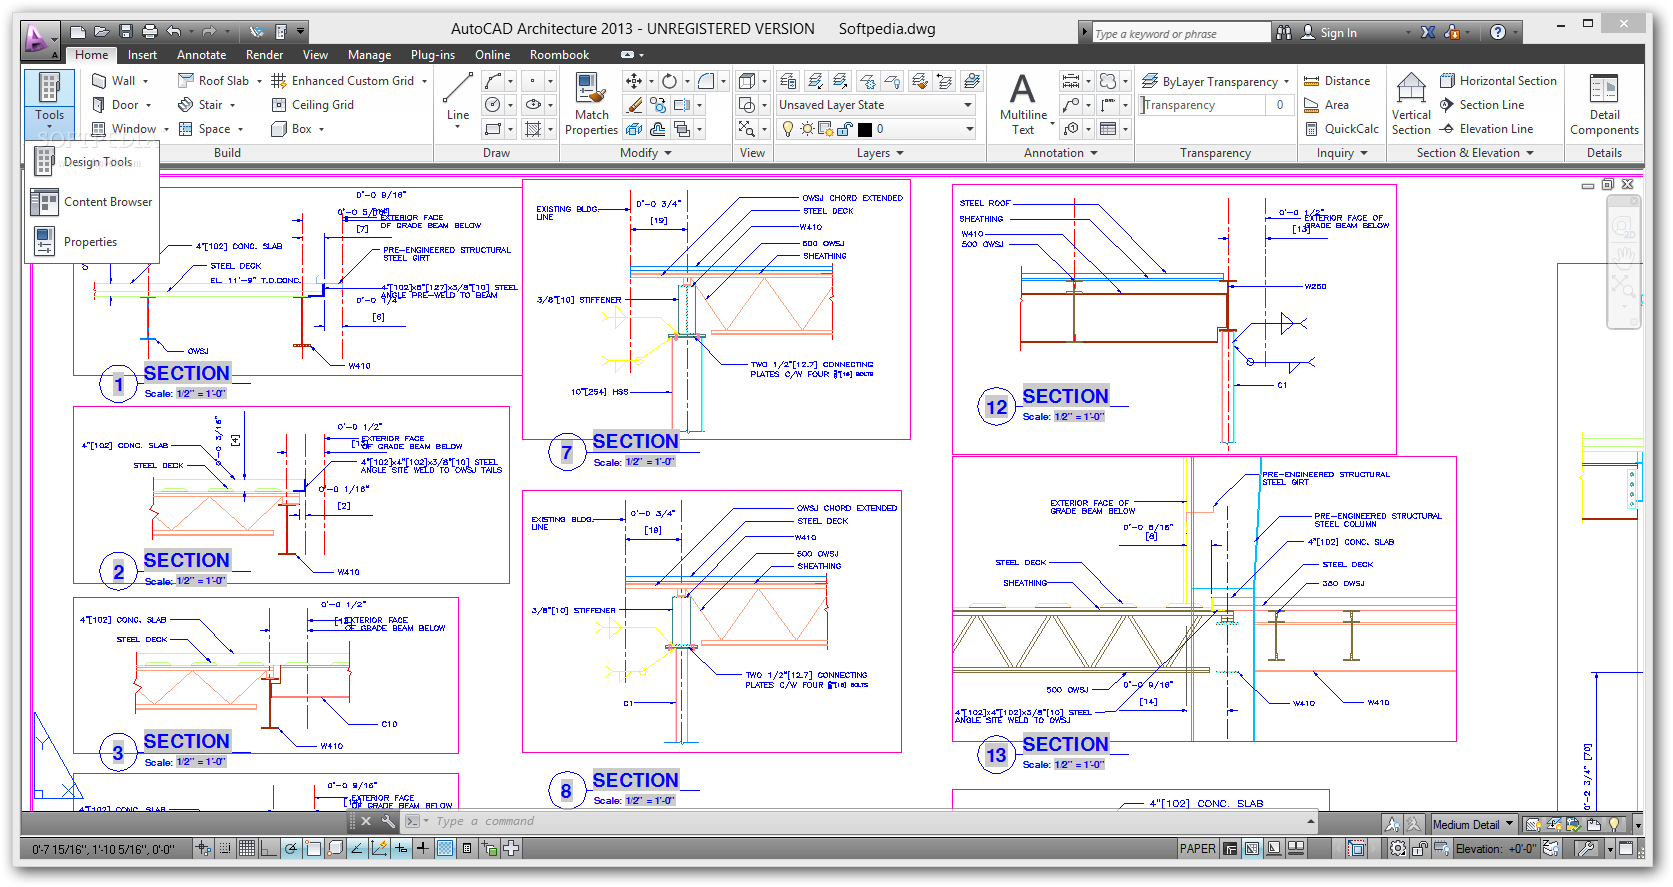 autodesk 3d building design suite premium 2015 download